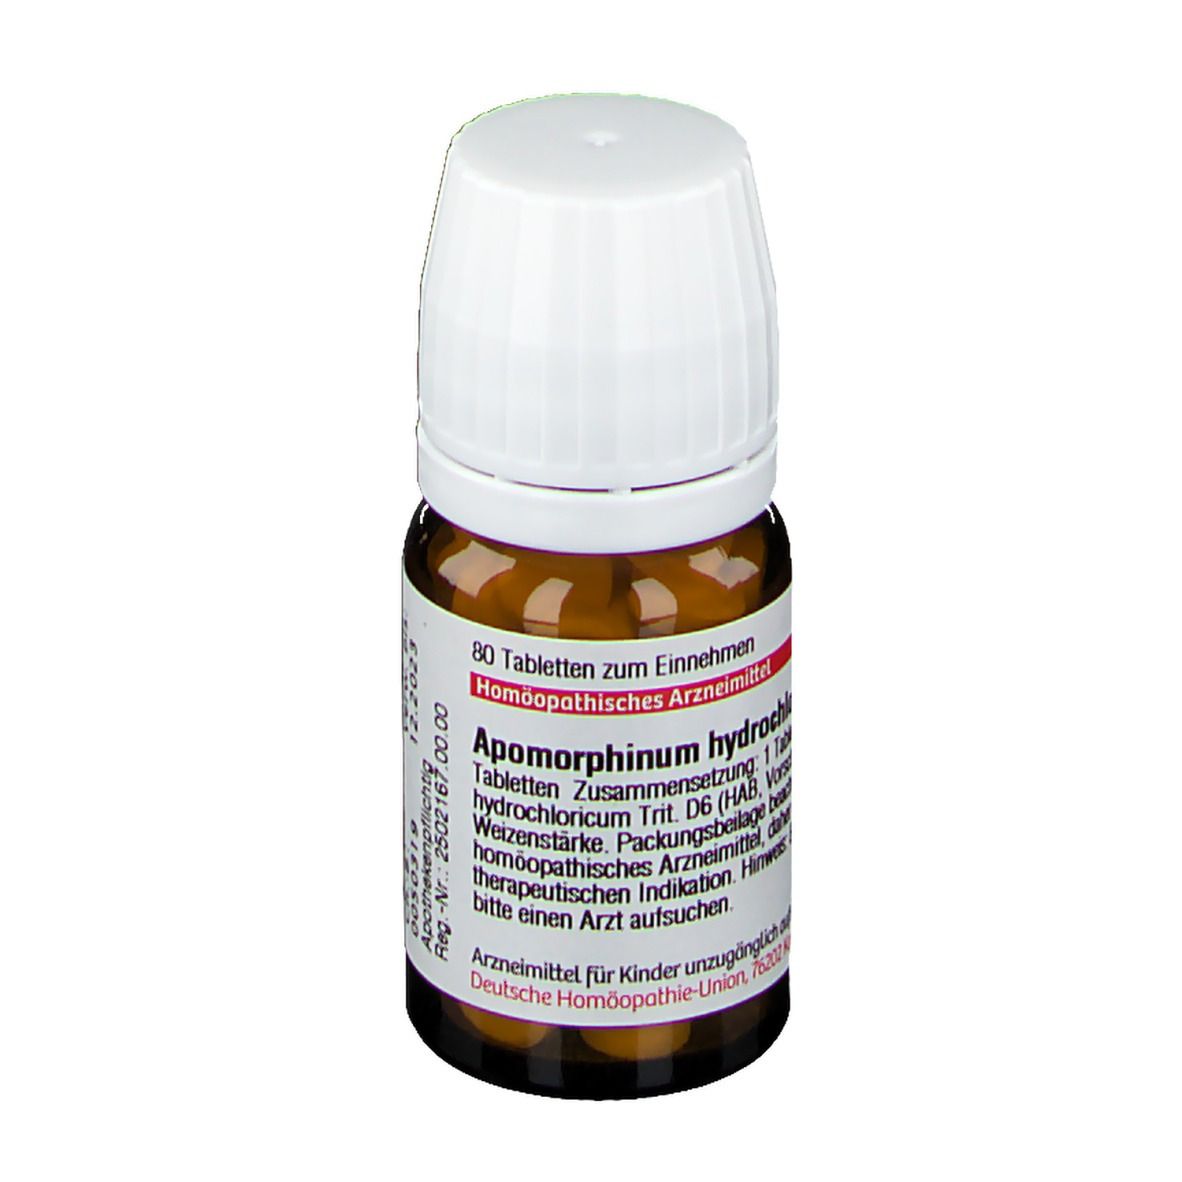 DHU Apomorphinum Hydrochloricum D6